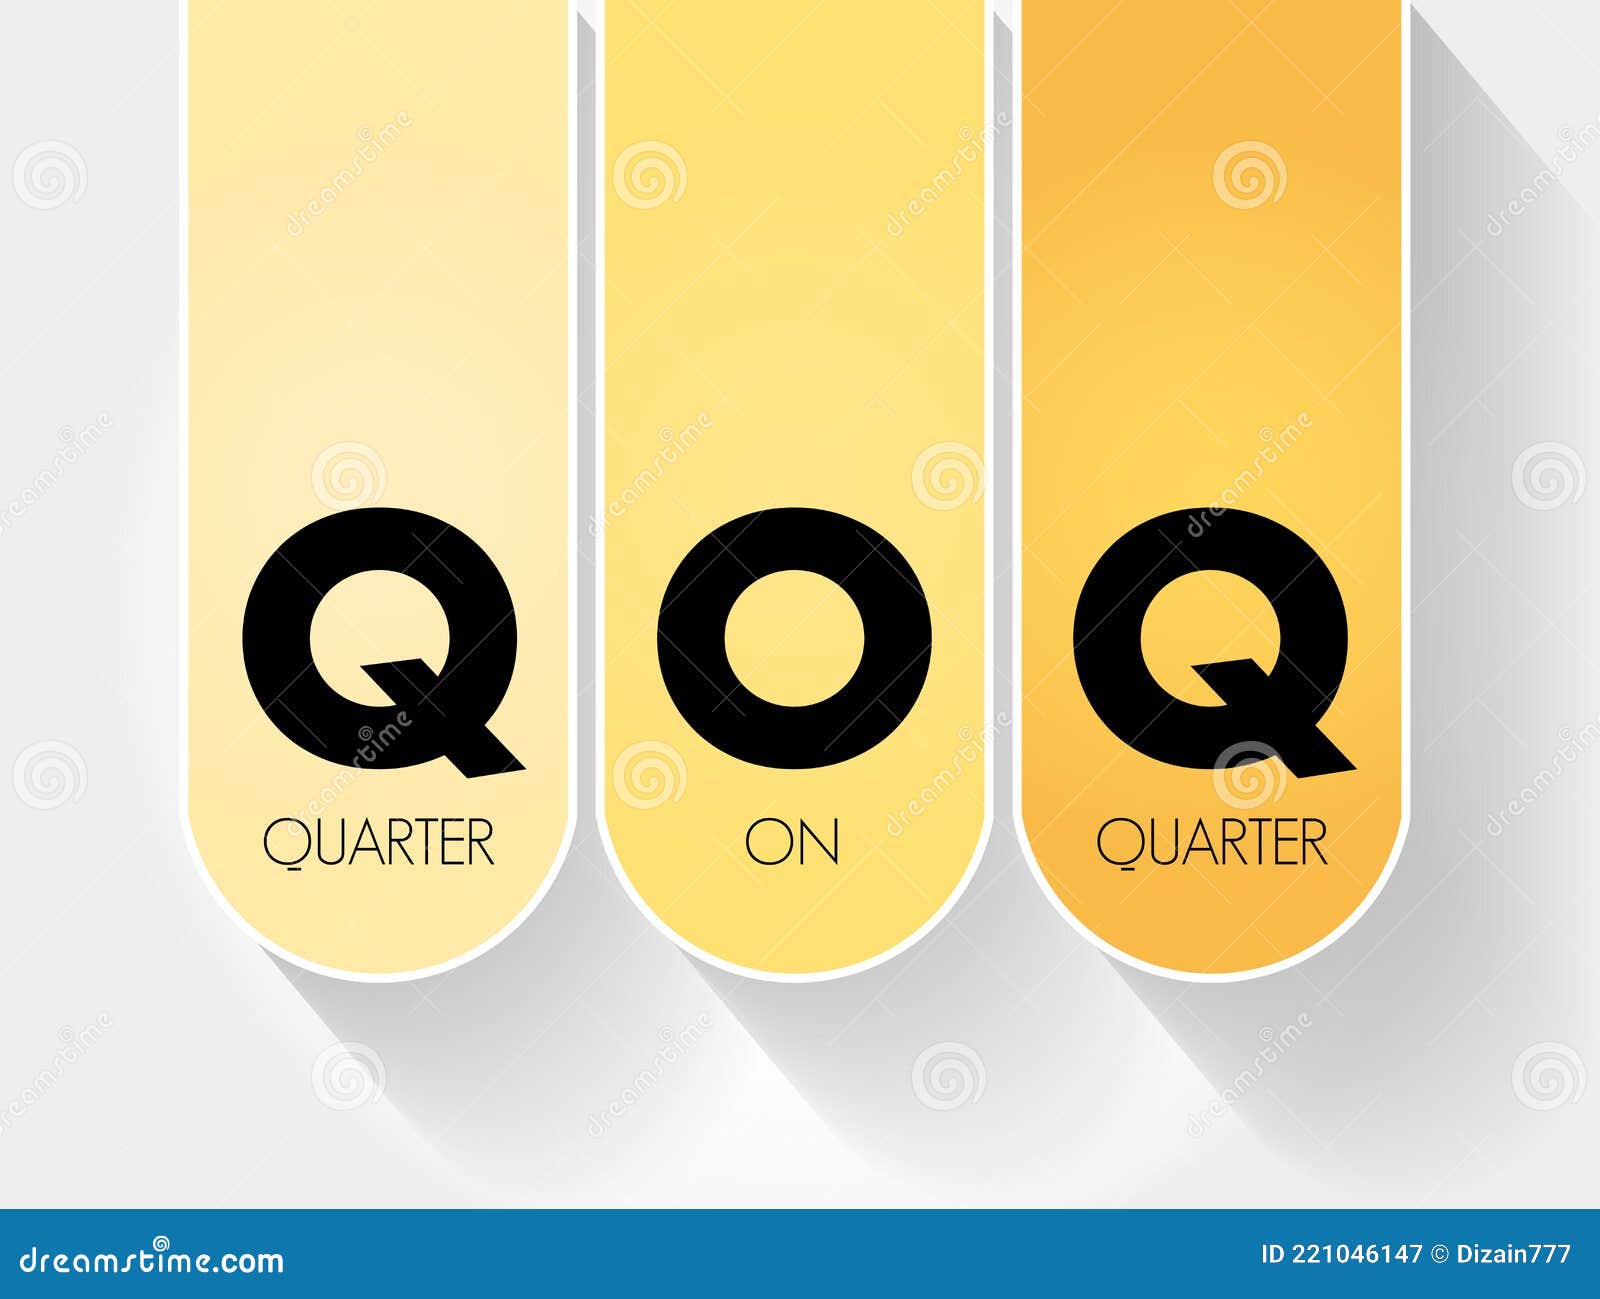 QOQ - Quarter on Quarter Acronym, Business Concept Background Stock Image -  Image of previous, phrase: 221046147